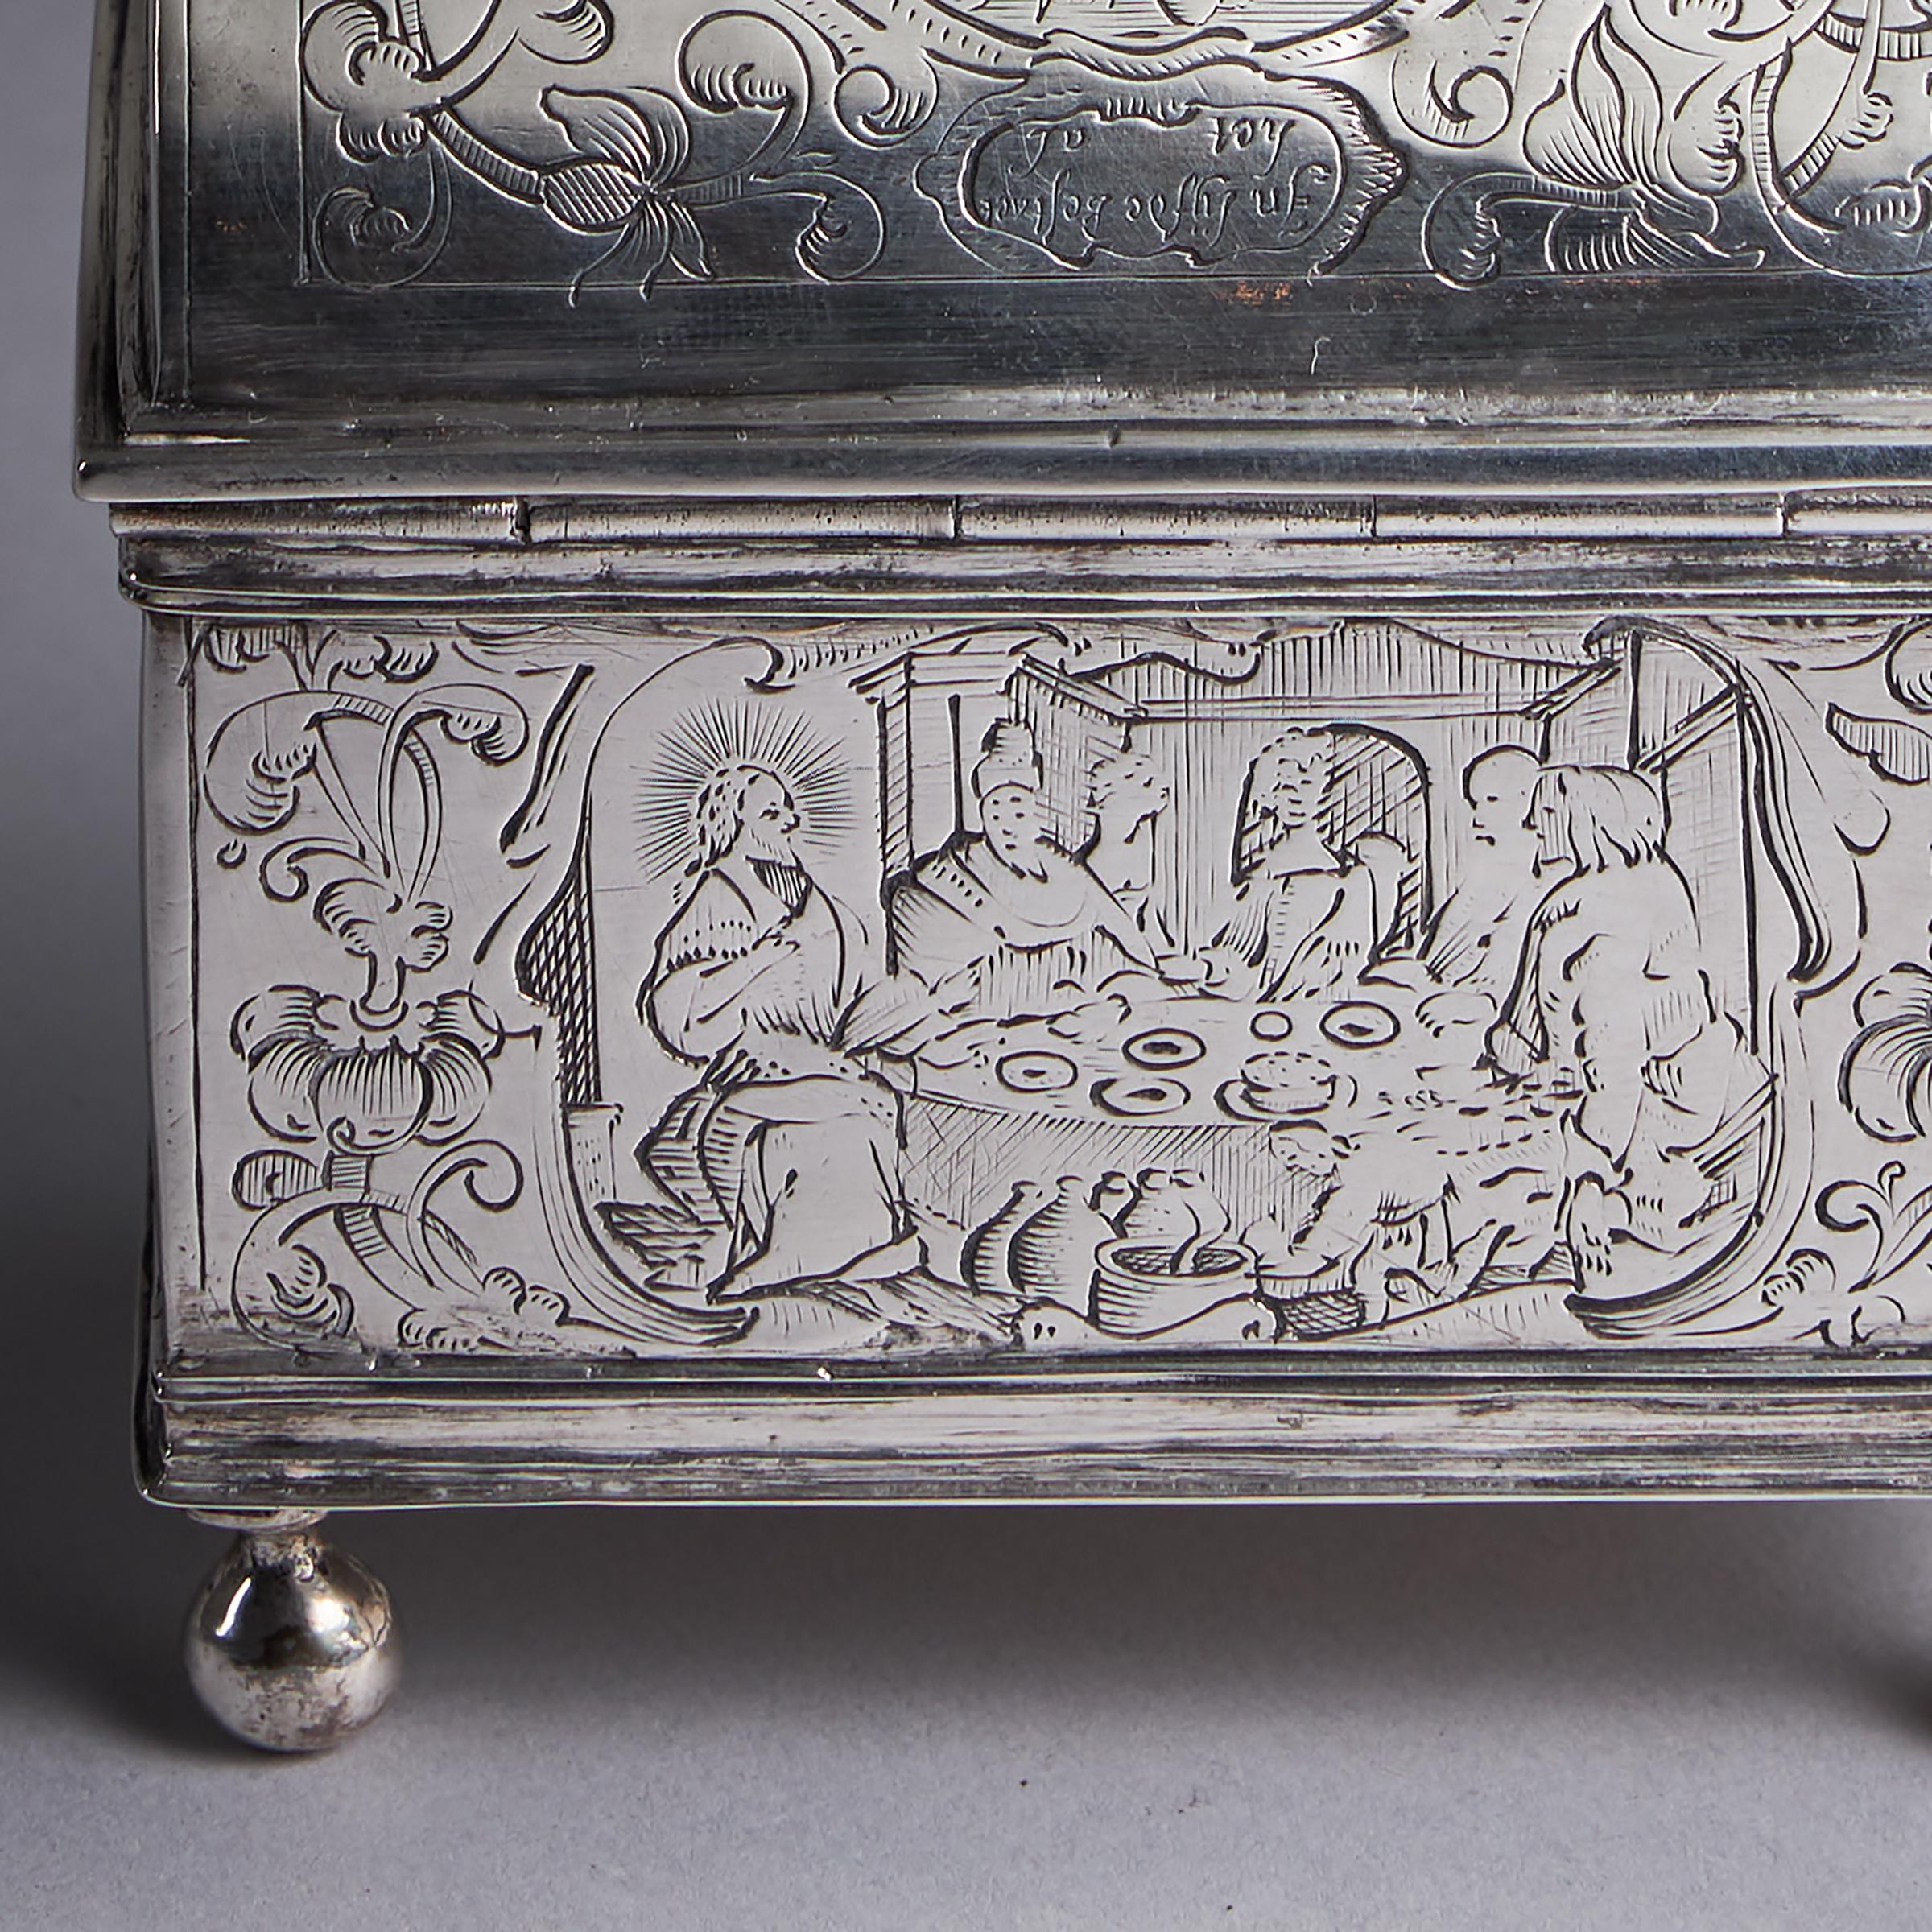 mid-17th century Dutch silver marriage coffin-7